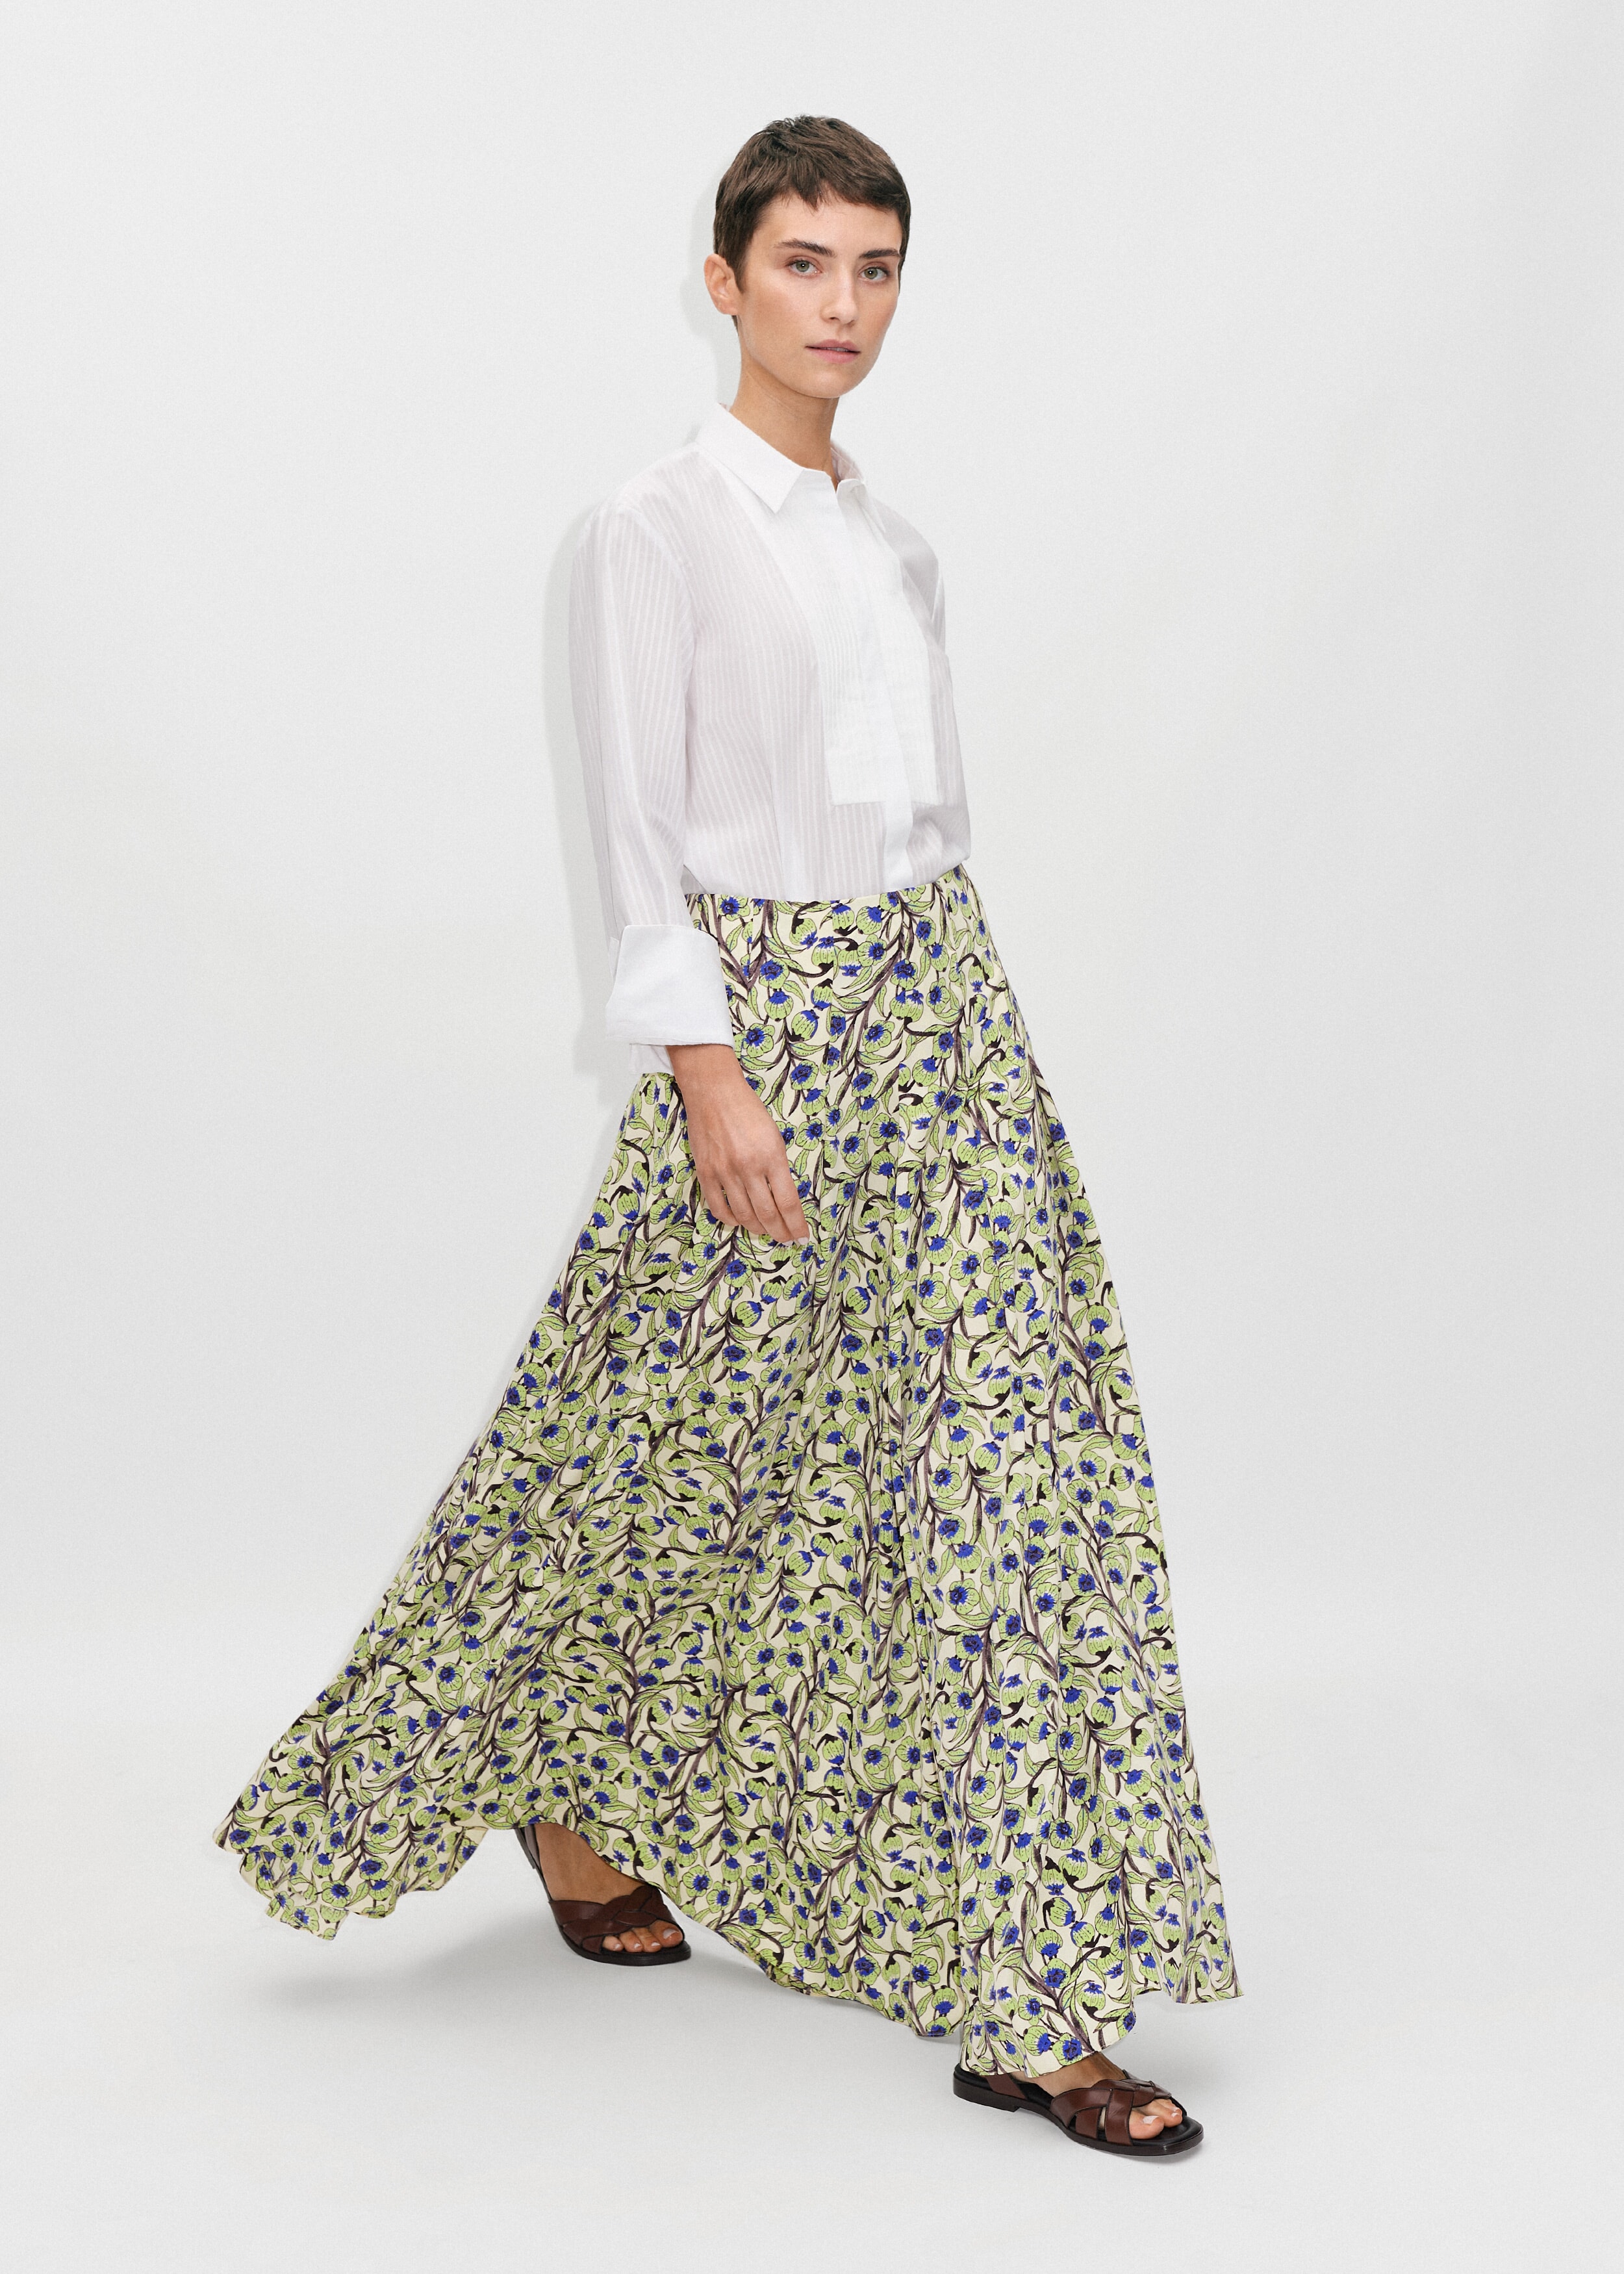 Trailing Flower Print Floor-Length Skirt Sicilian Olive/Cream/Blue